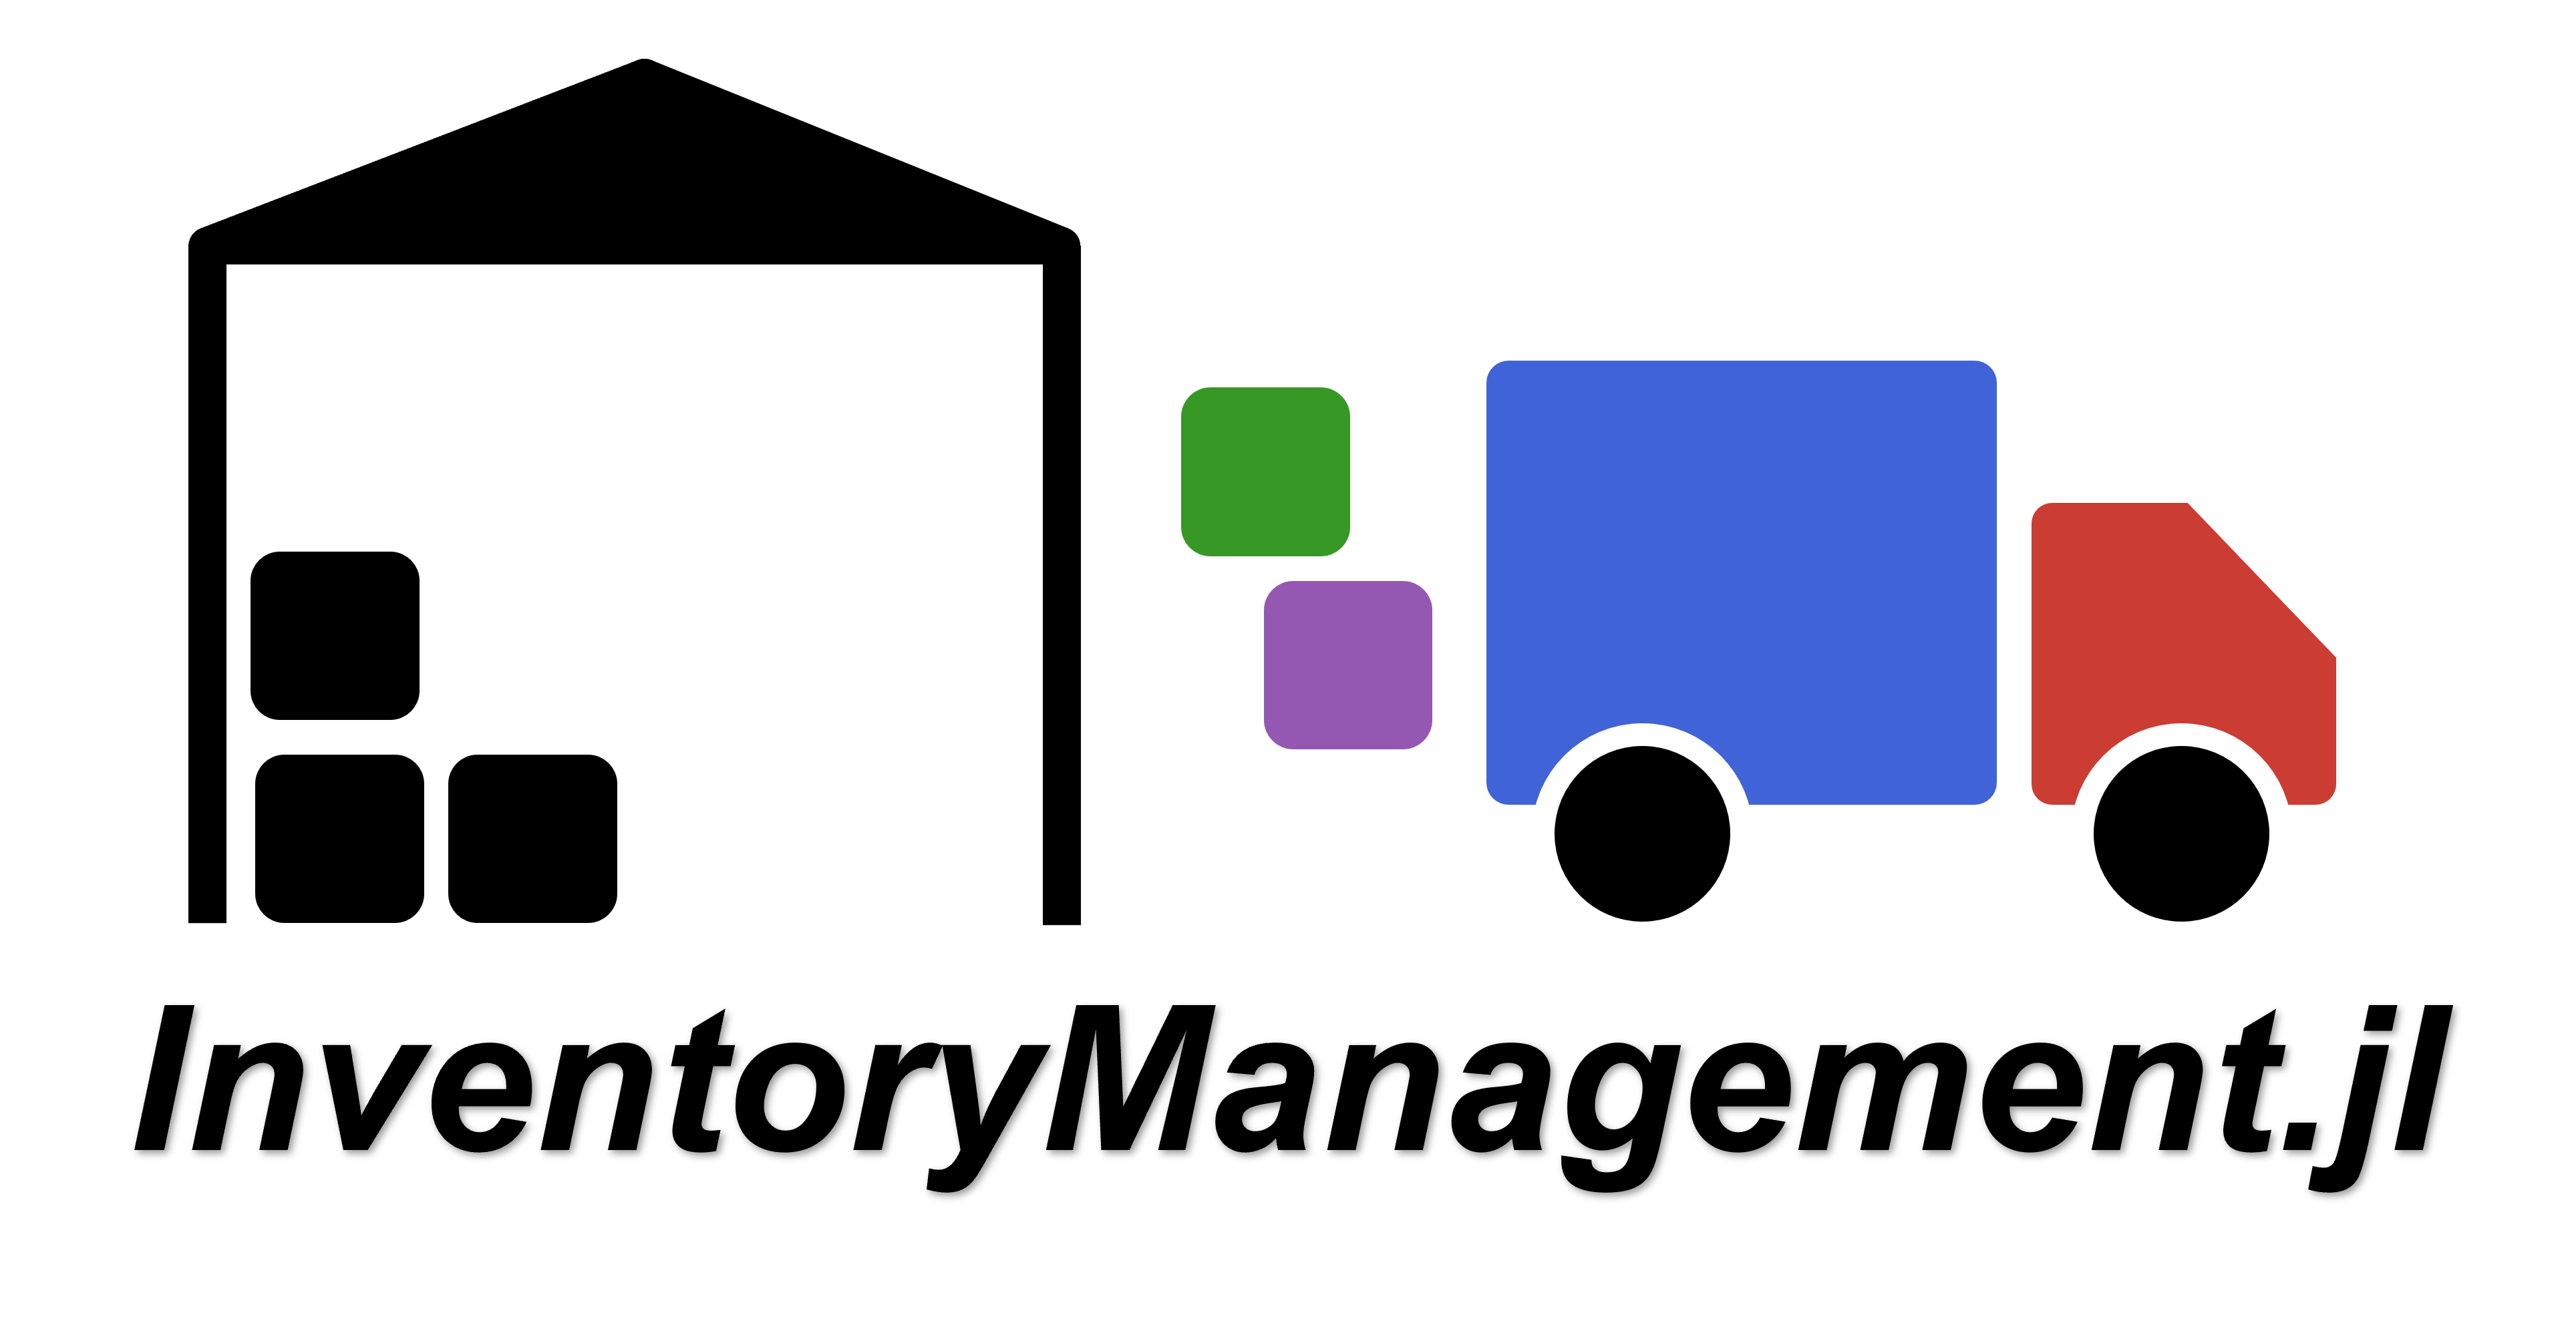 InventoryManagement.jl logo